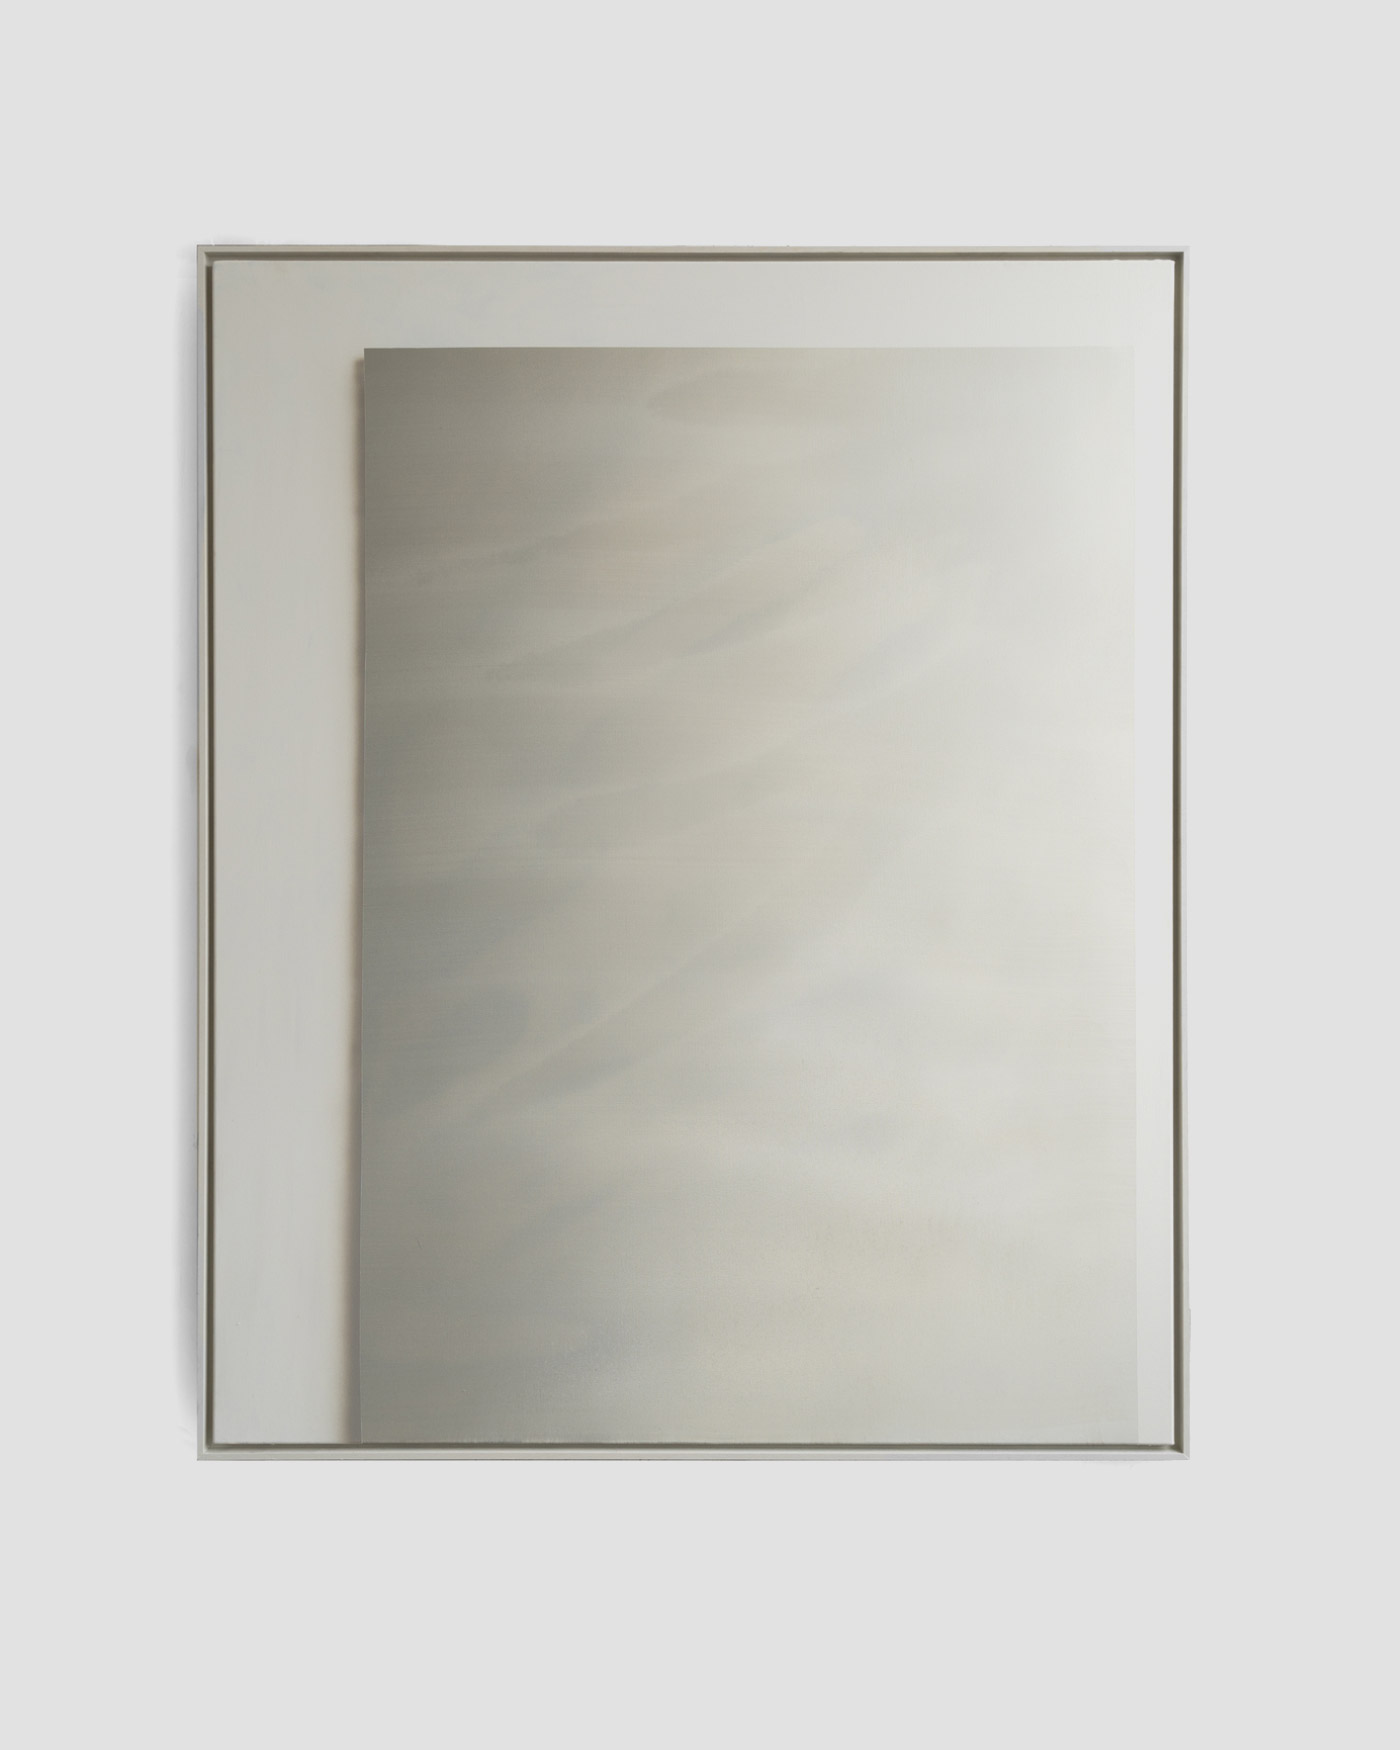 Tycjan Knut, light matters 9, 2021, Acrylic on canvas, 154 × 124 cm © The Artist, Image via Cadogan Gallery